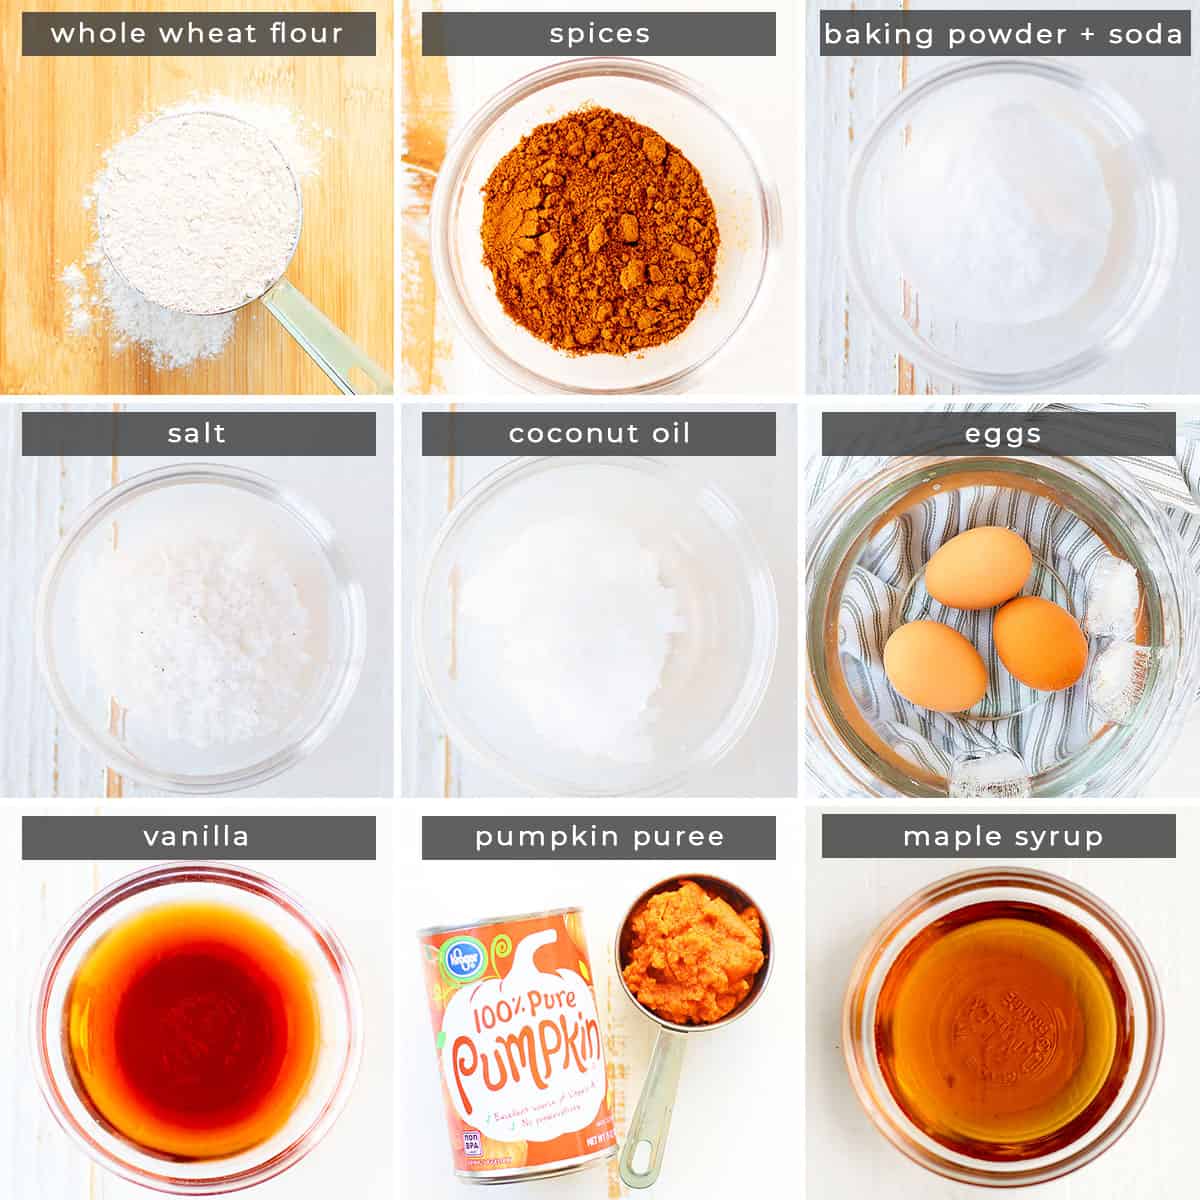 Image containing recipe ingredients whole wheat flour, spices, baking powder + soda, salt, coconut oil, eggs, vanilla, pumpkin puree, maple syrup.